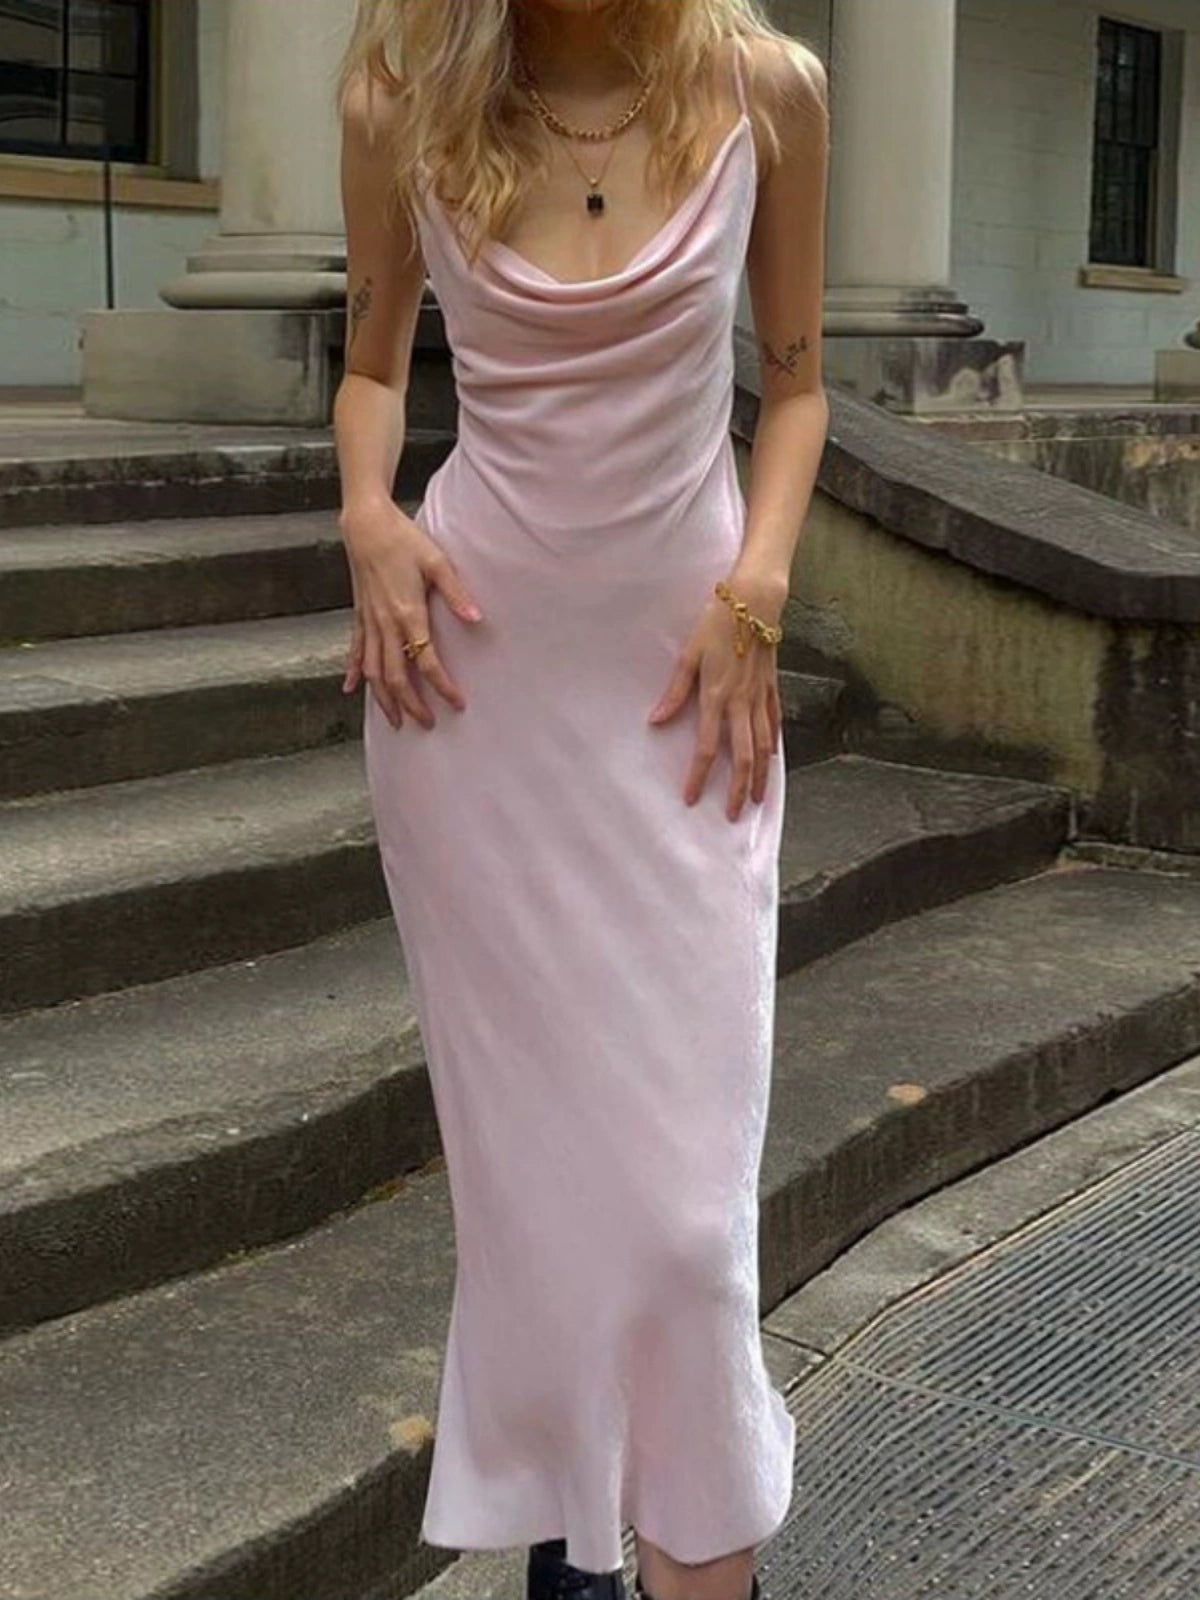 Velvet Low Cut Bodycon Dress: Elegant Evening Wear for Women